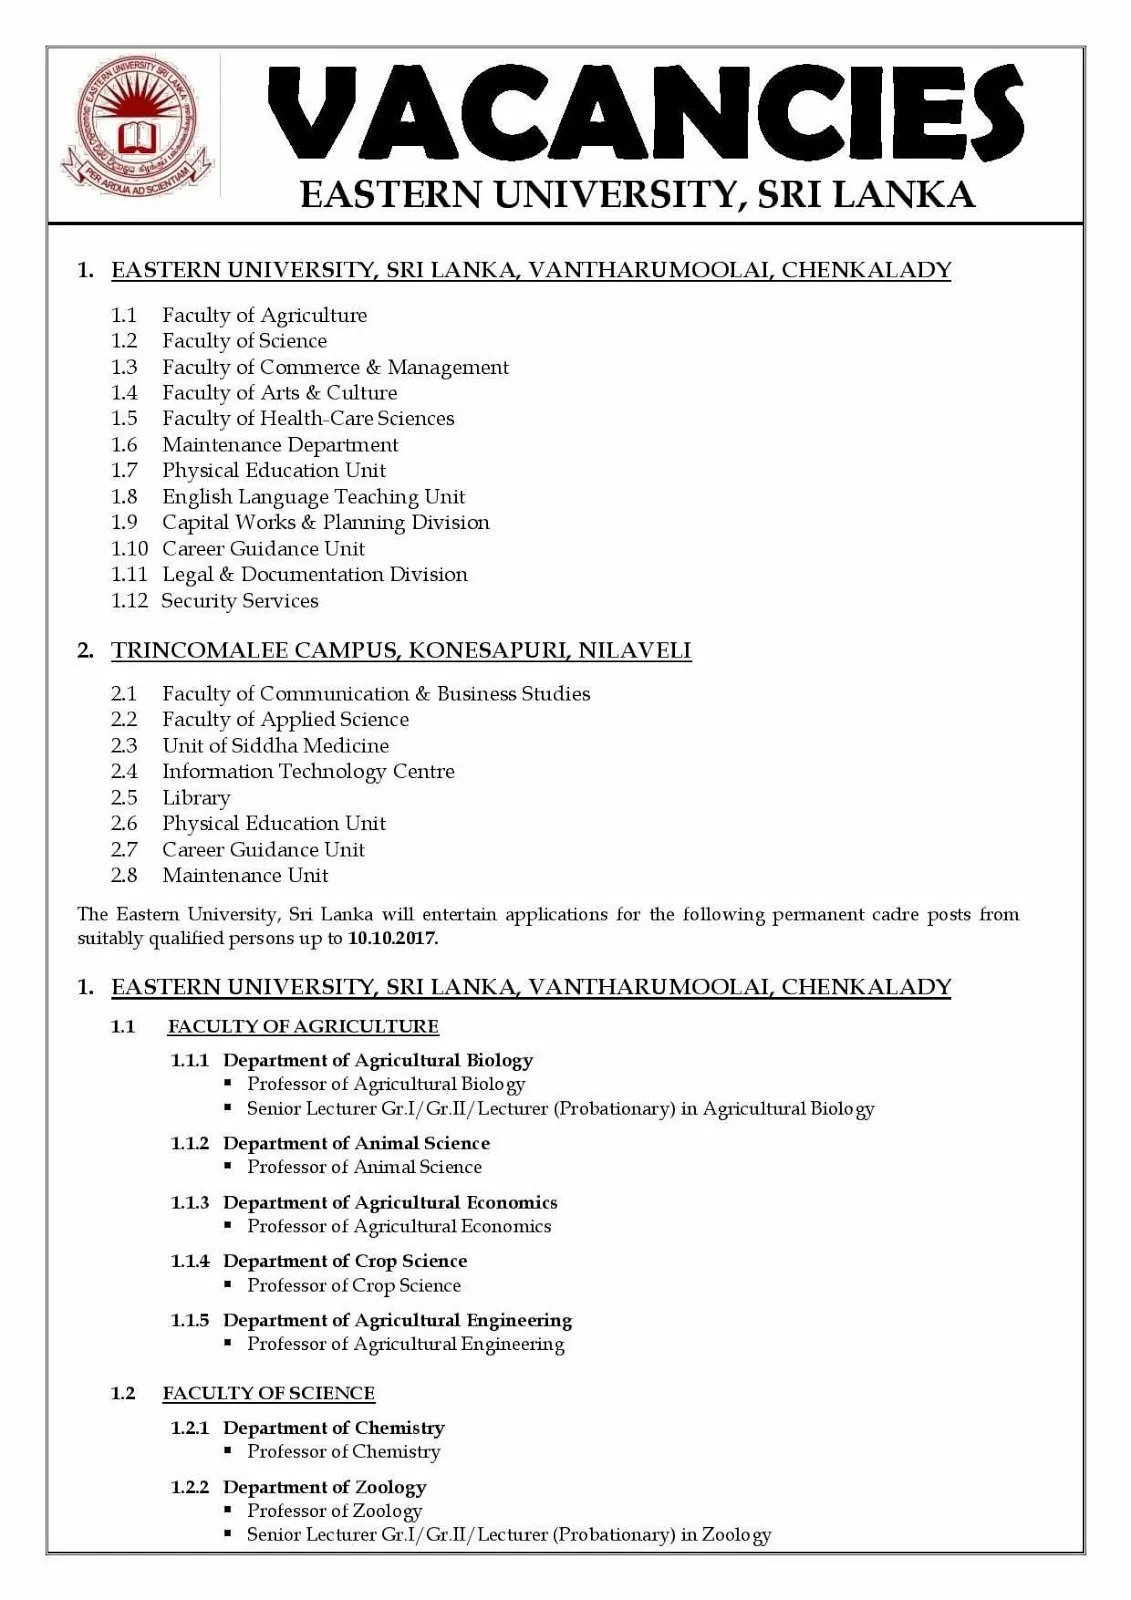 Eastern University Vacancies